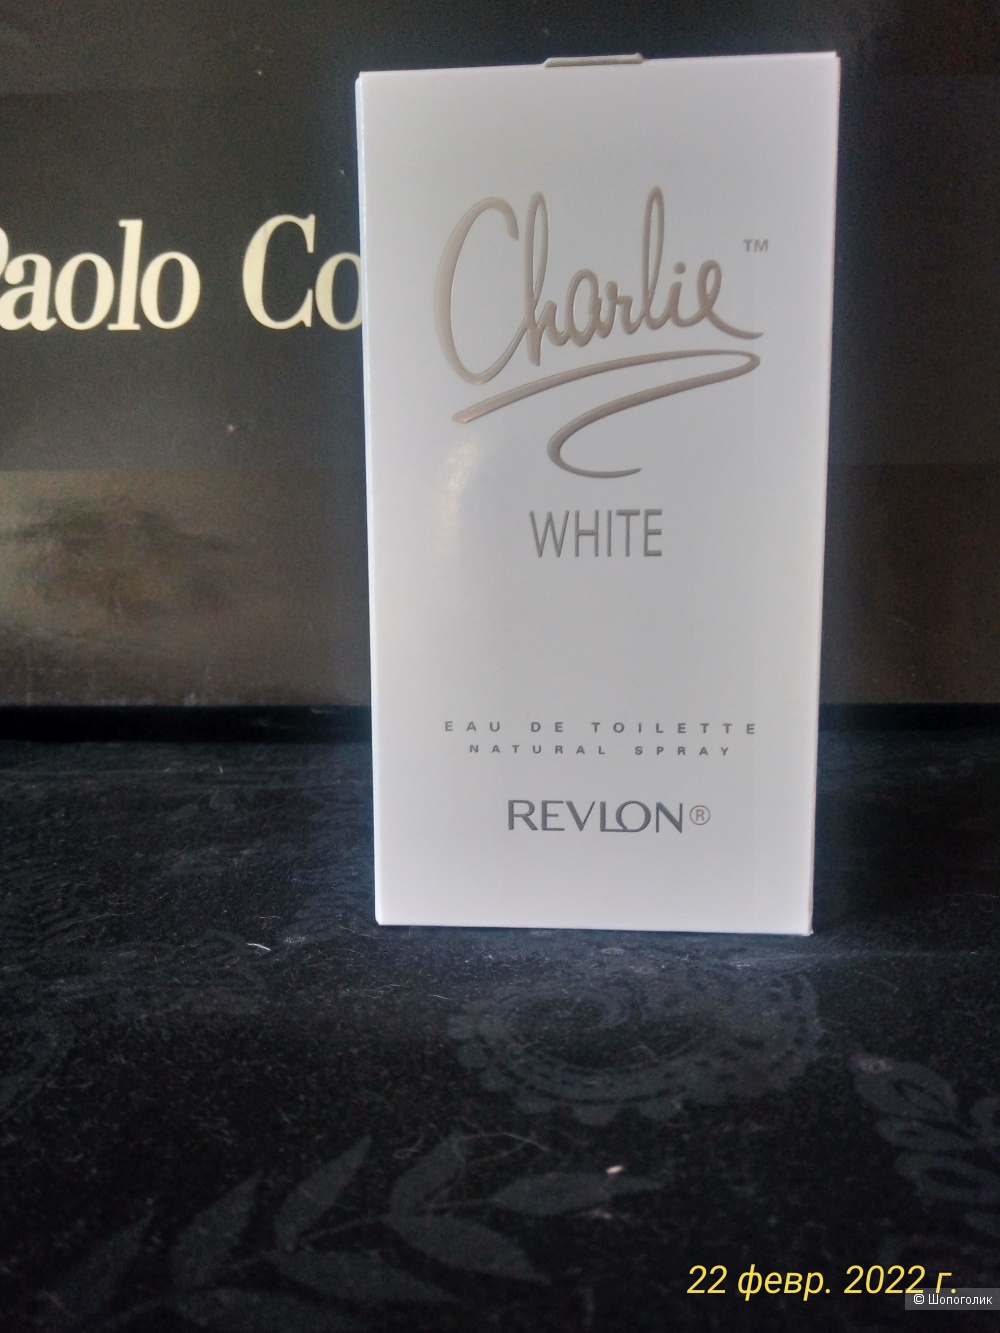 Парфюм Чарли Revlon 100 ml